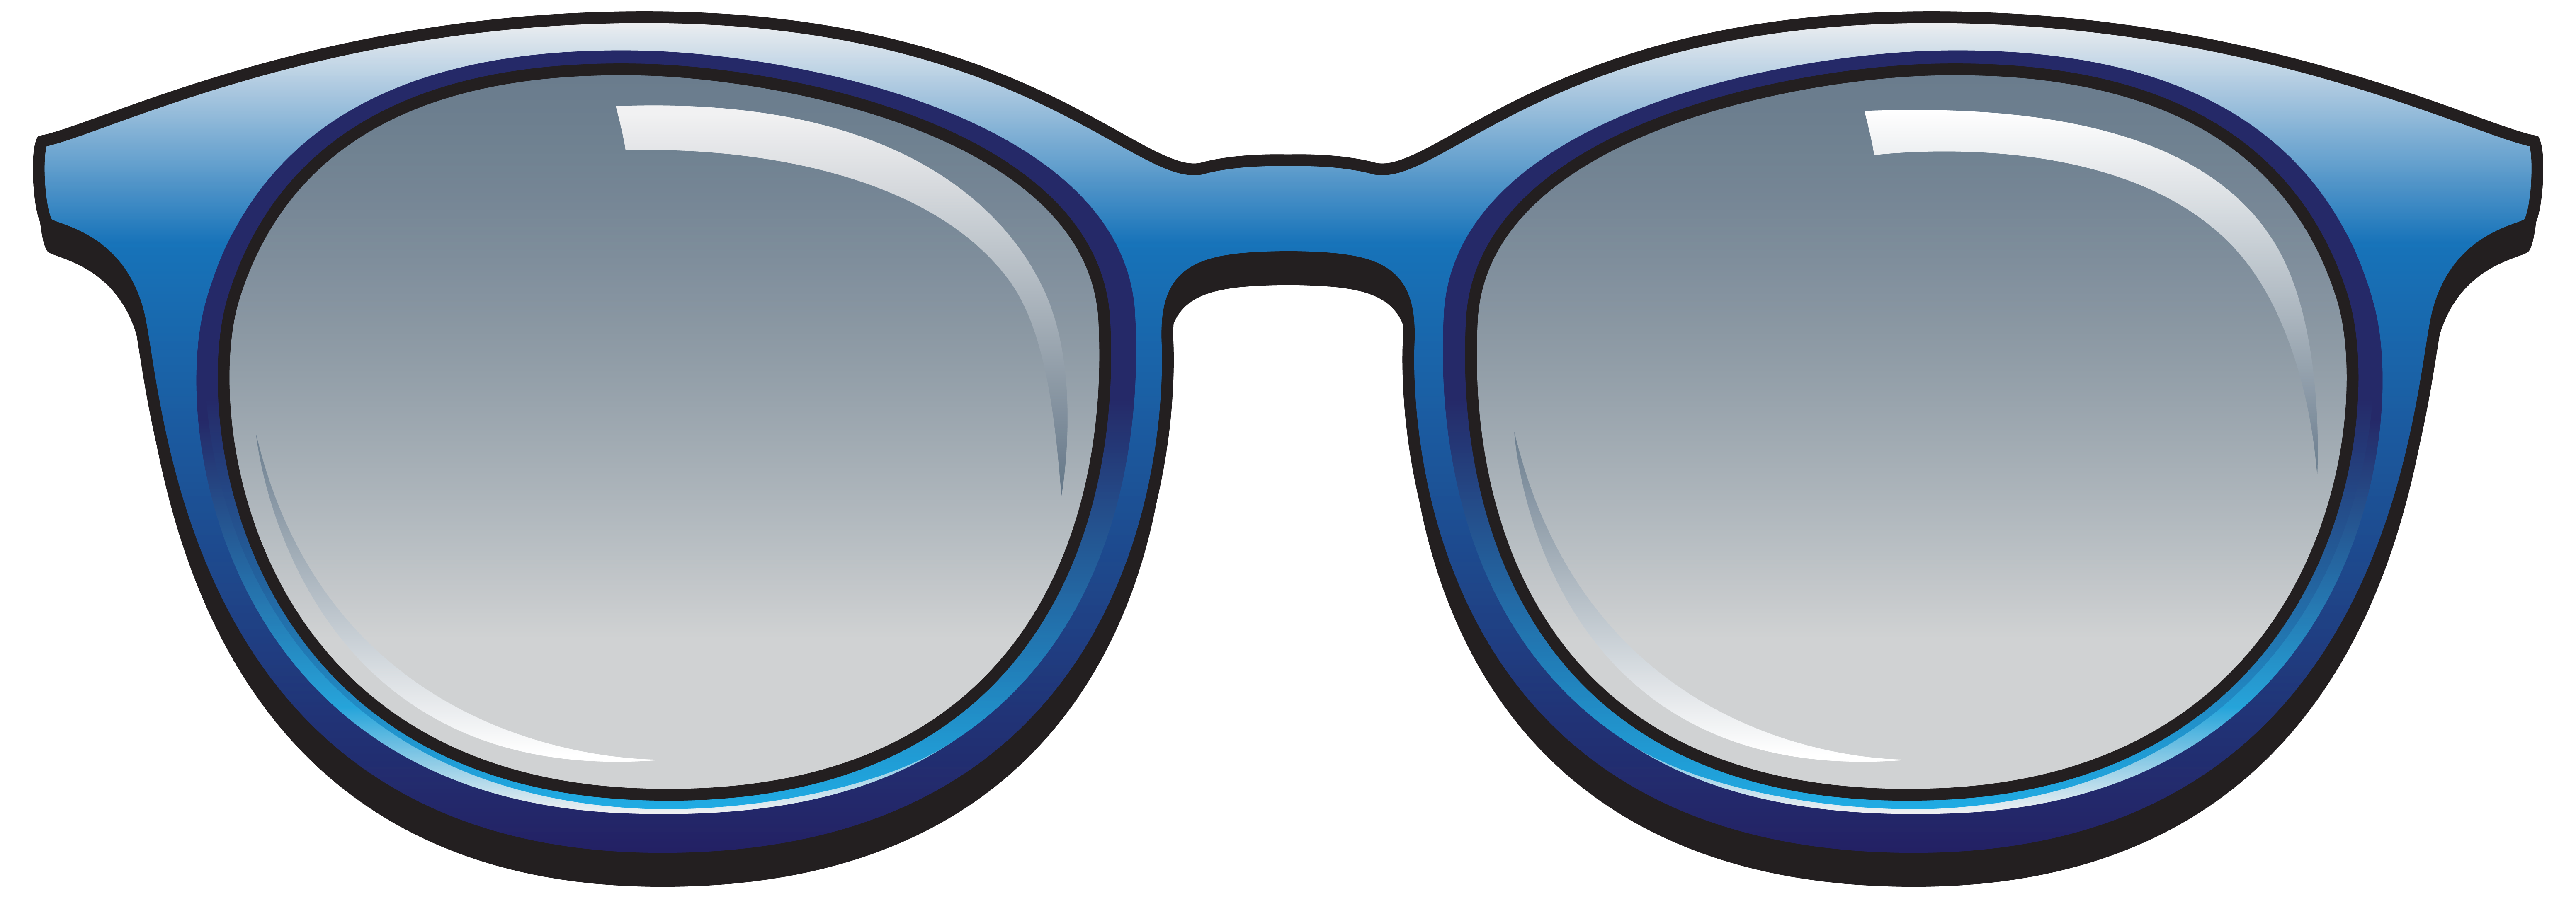 Blue Goggles Sunglasses Download HQ PNG Clipart